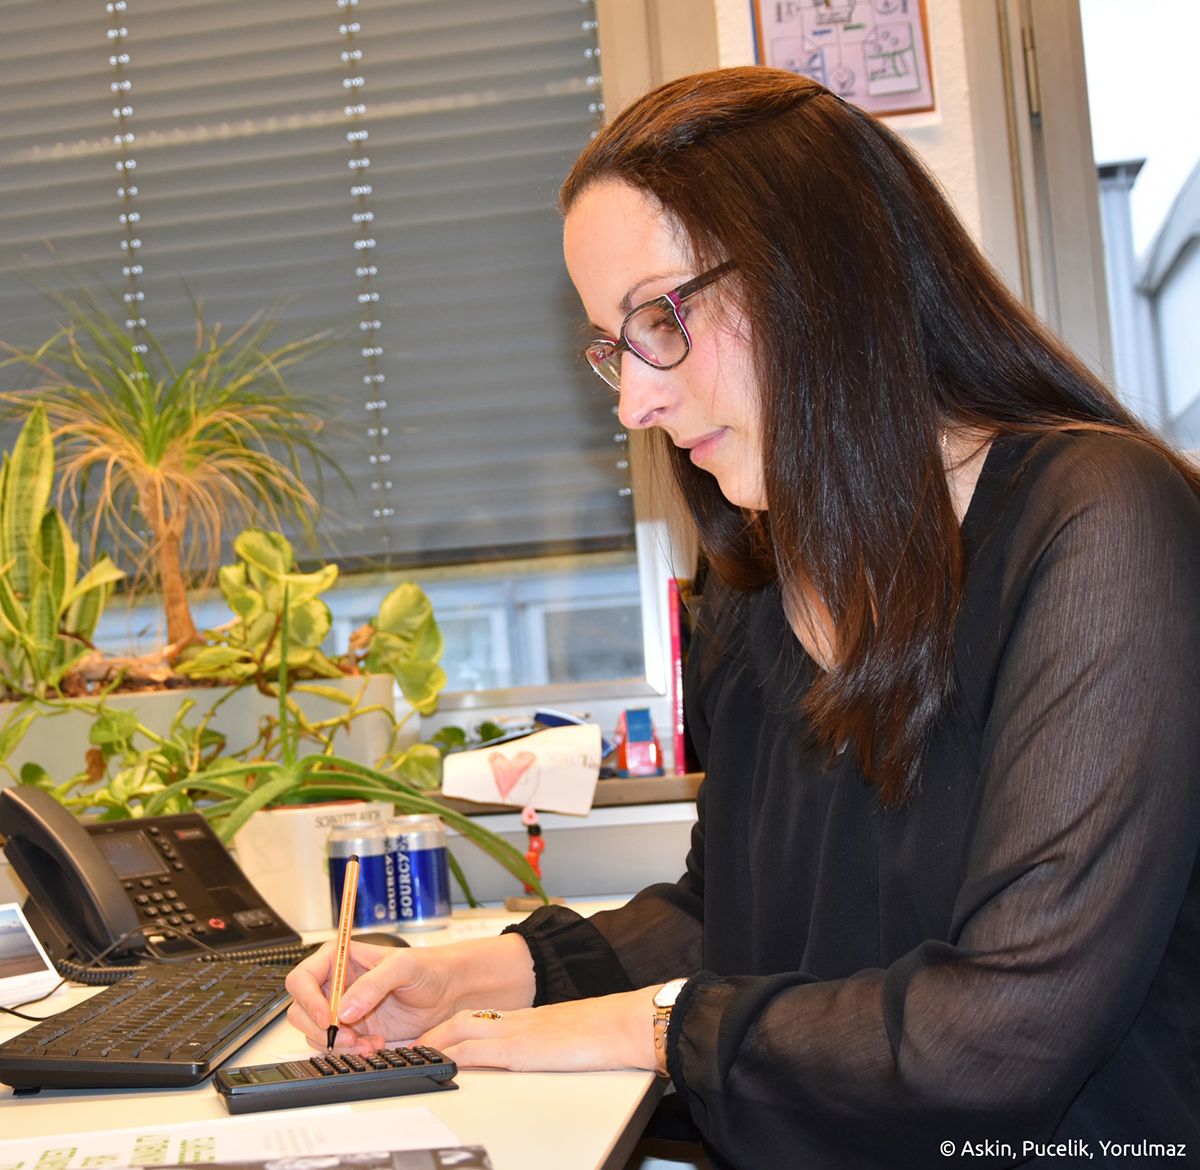 Verena Stentenbach, Maschinenbauingenieurin bei Ball Packaging Europe Bonn, rechnend am Arbeitsplatz. /Bildquelle: Askin, Pucelik, Yorulmaz